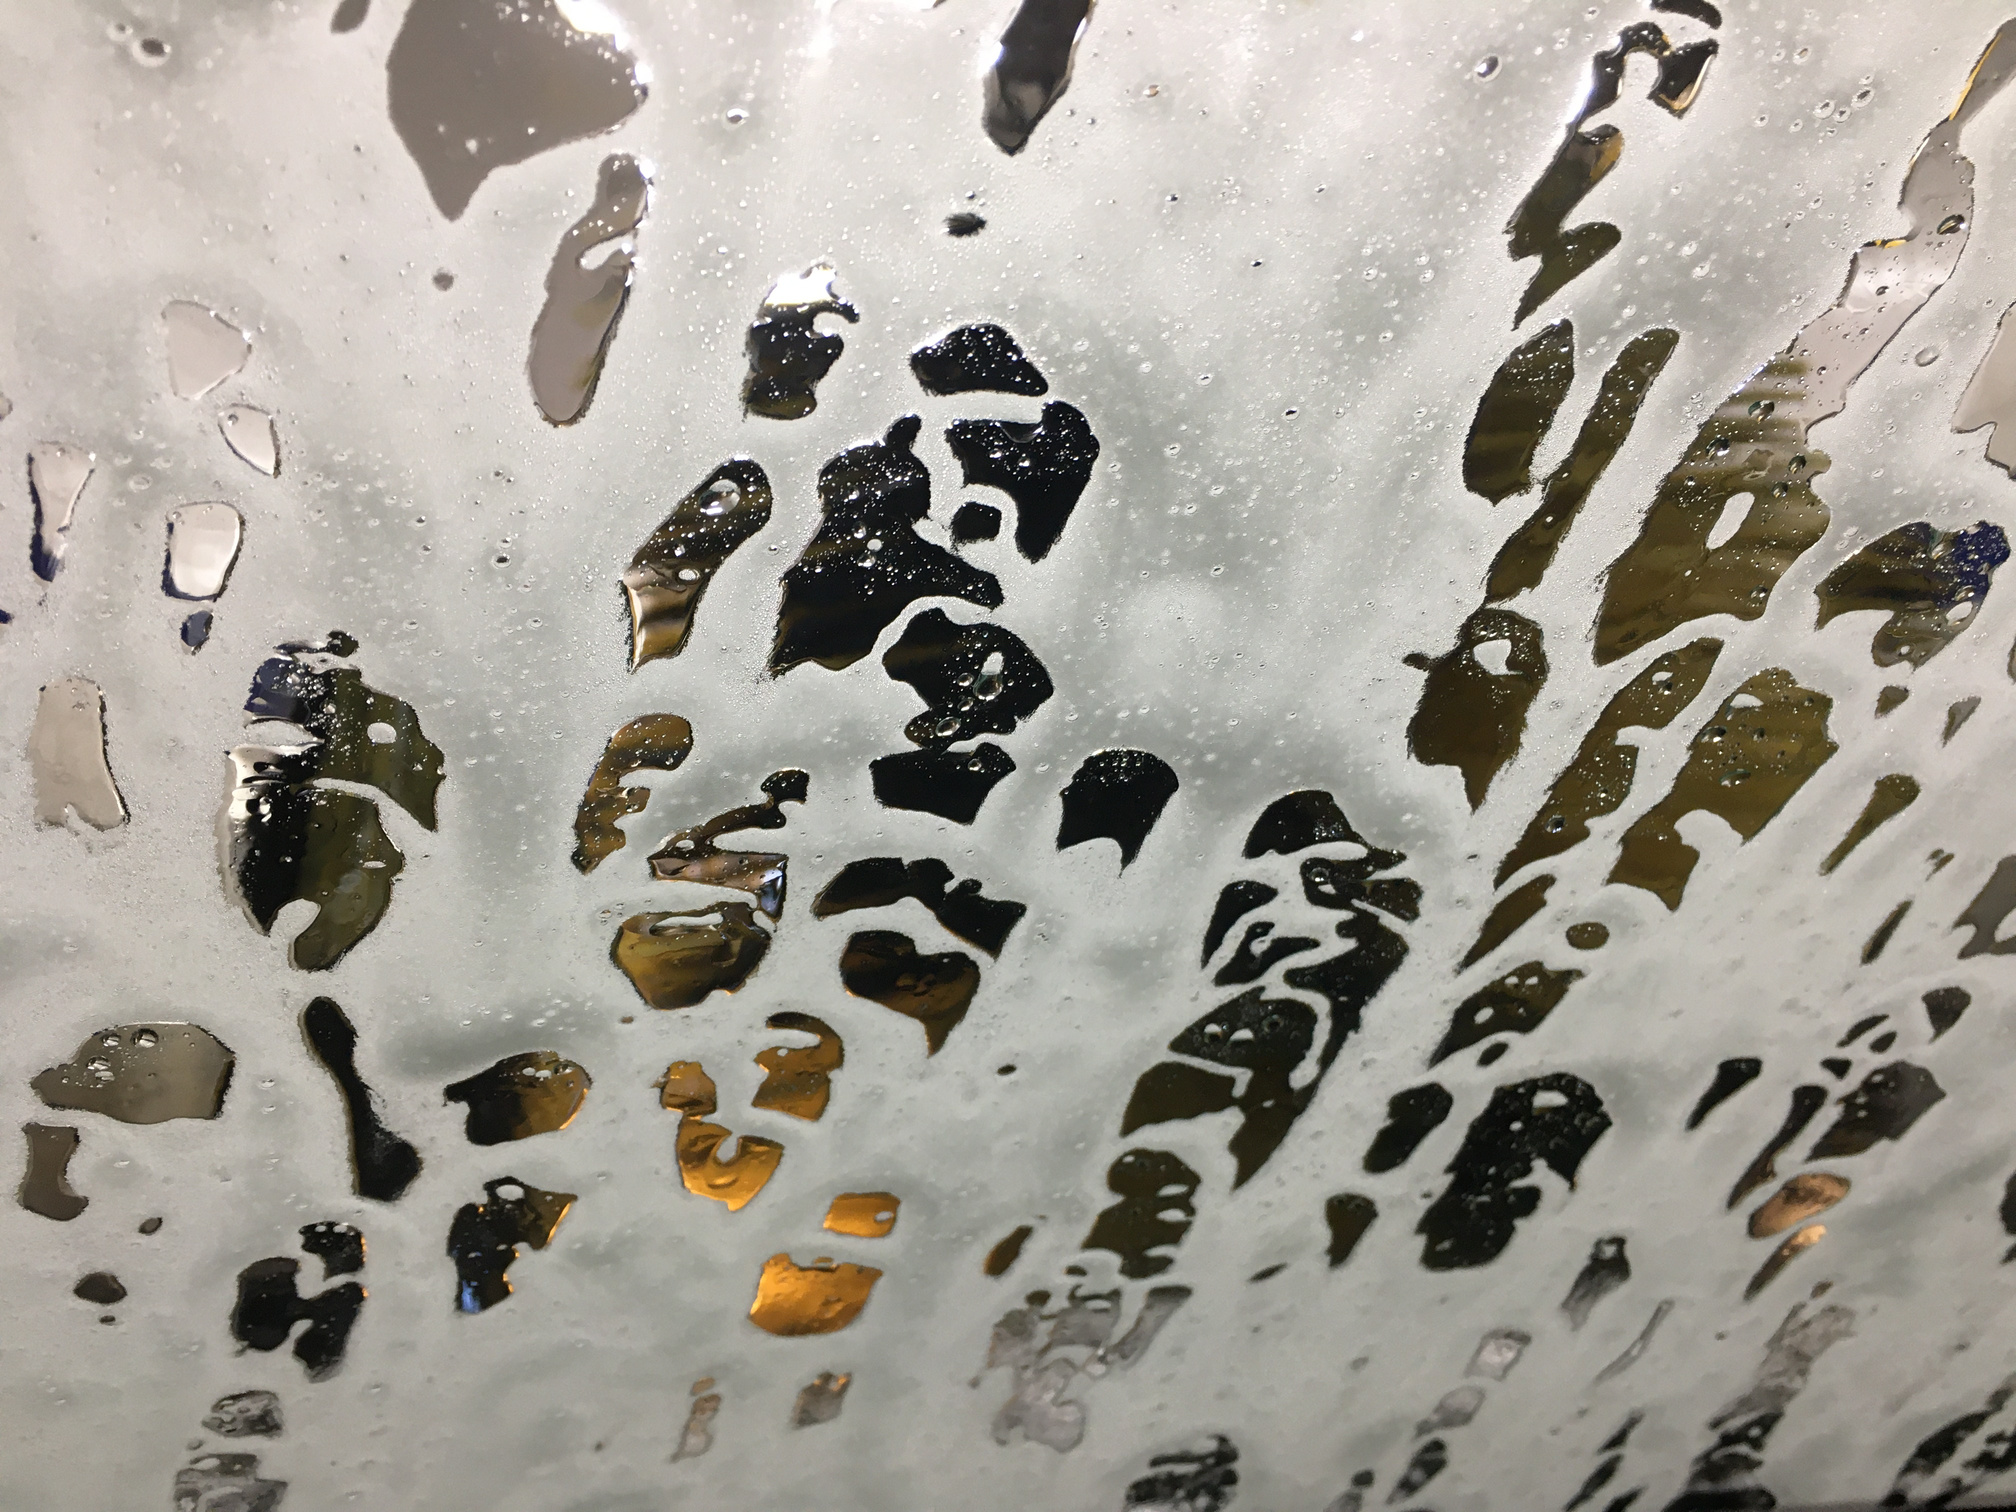 Soapy Carwash window